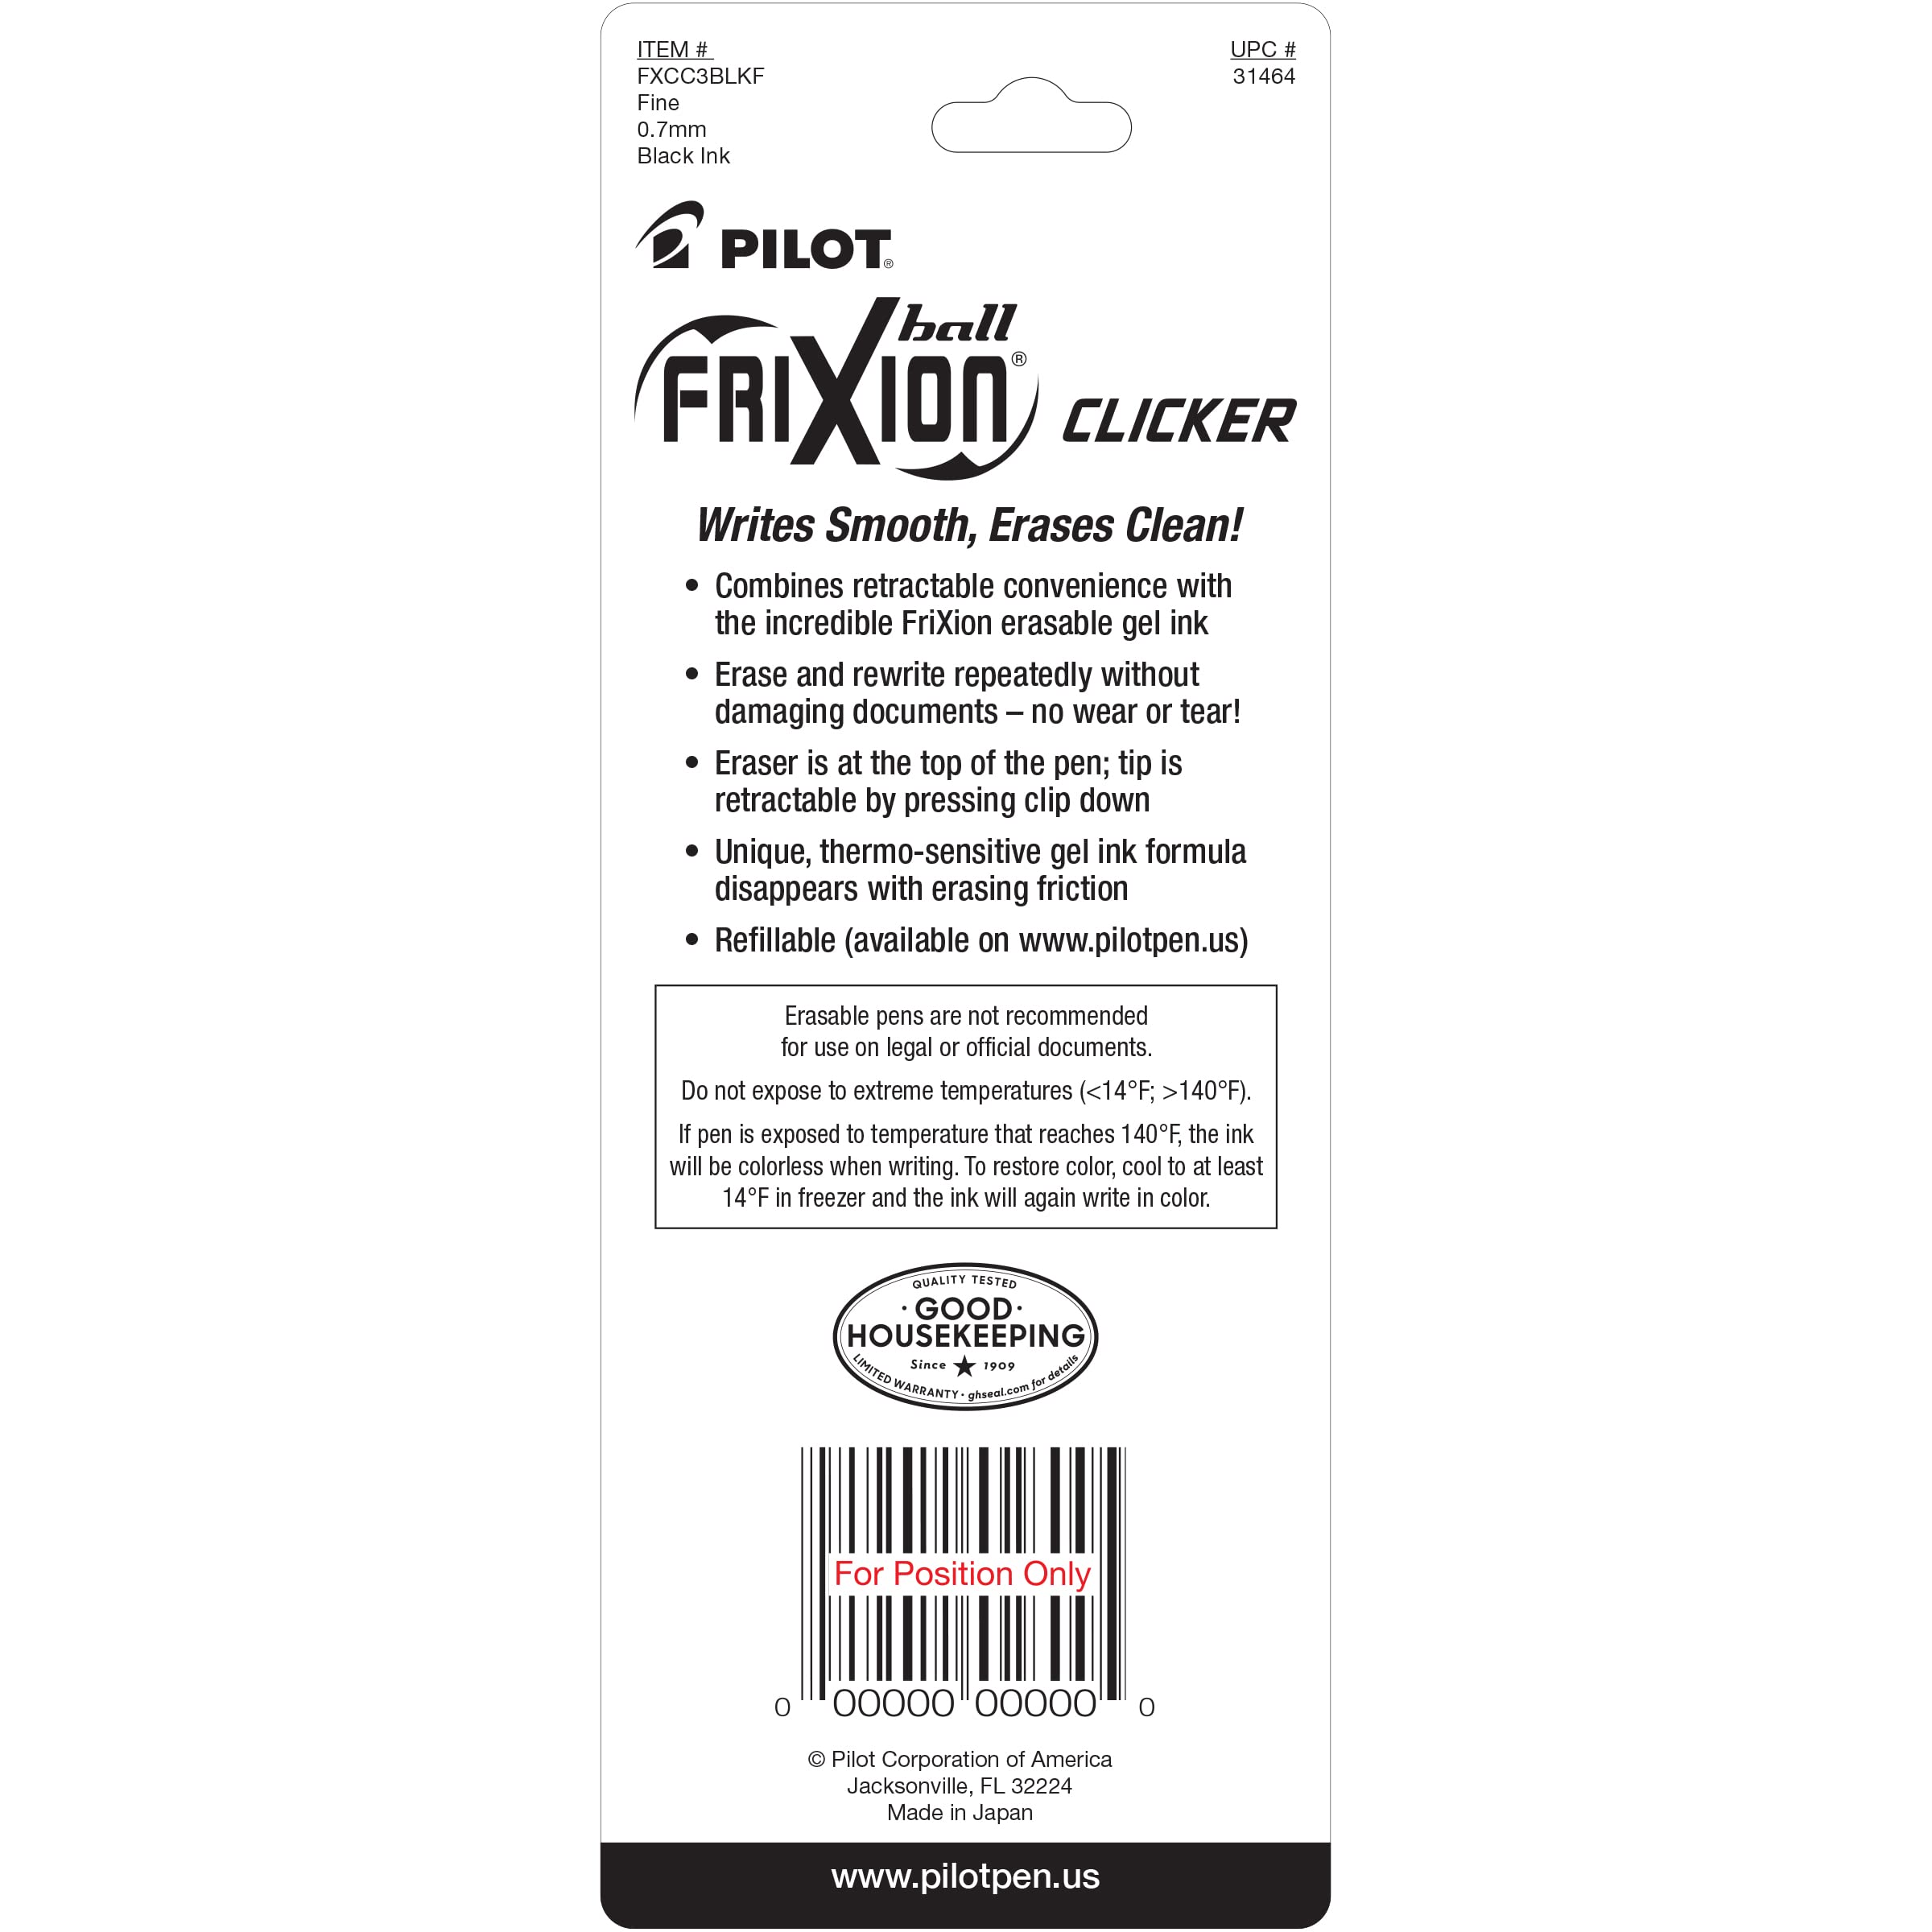 PILOT FriXion Clicker Erasable, Refillable & Retractable Gel Ink Pens, Fine Point, Black Ink, 3-Pack (31464)